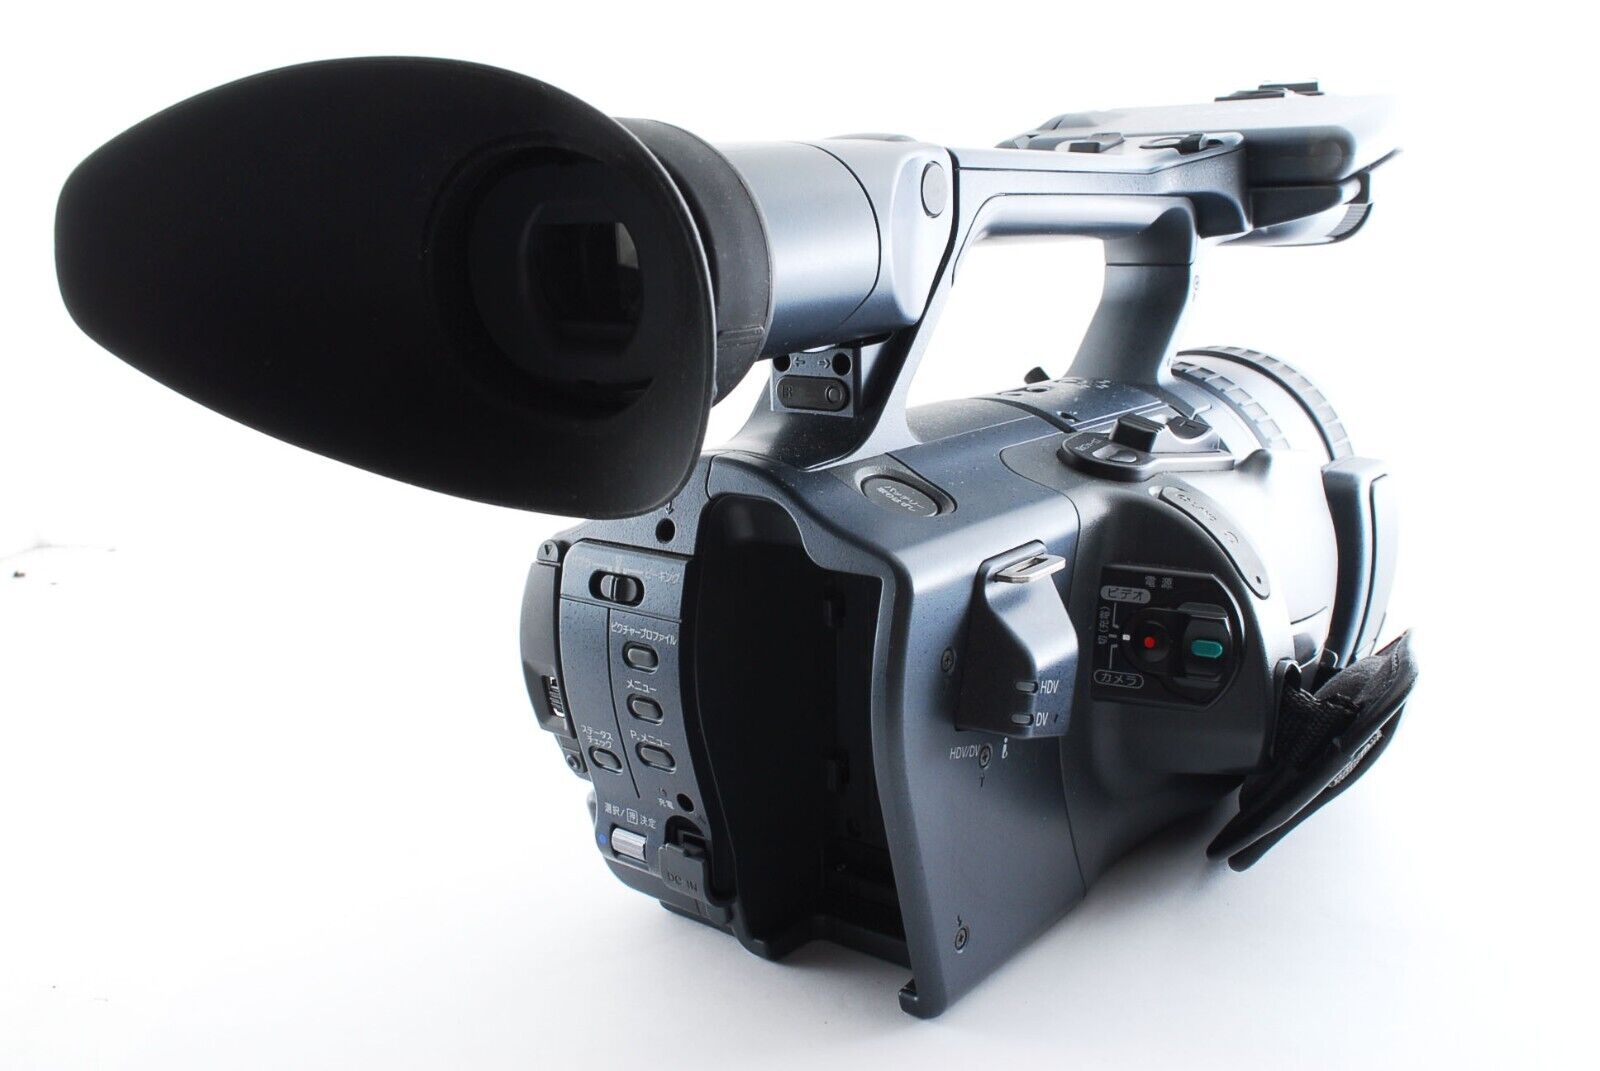 Sony+Handycam+HDR-FX7+DV+Camcorder for sale online | eBay